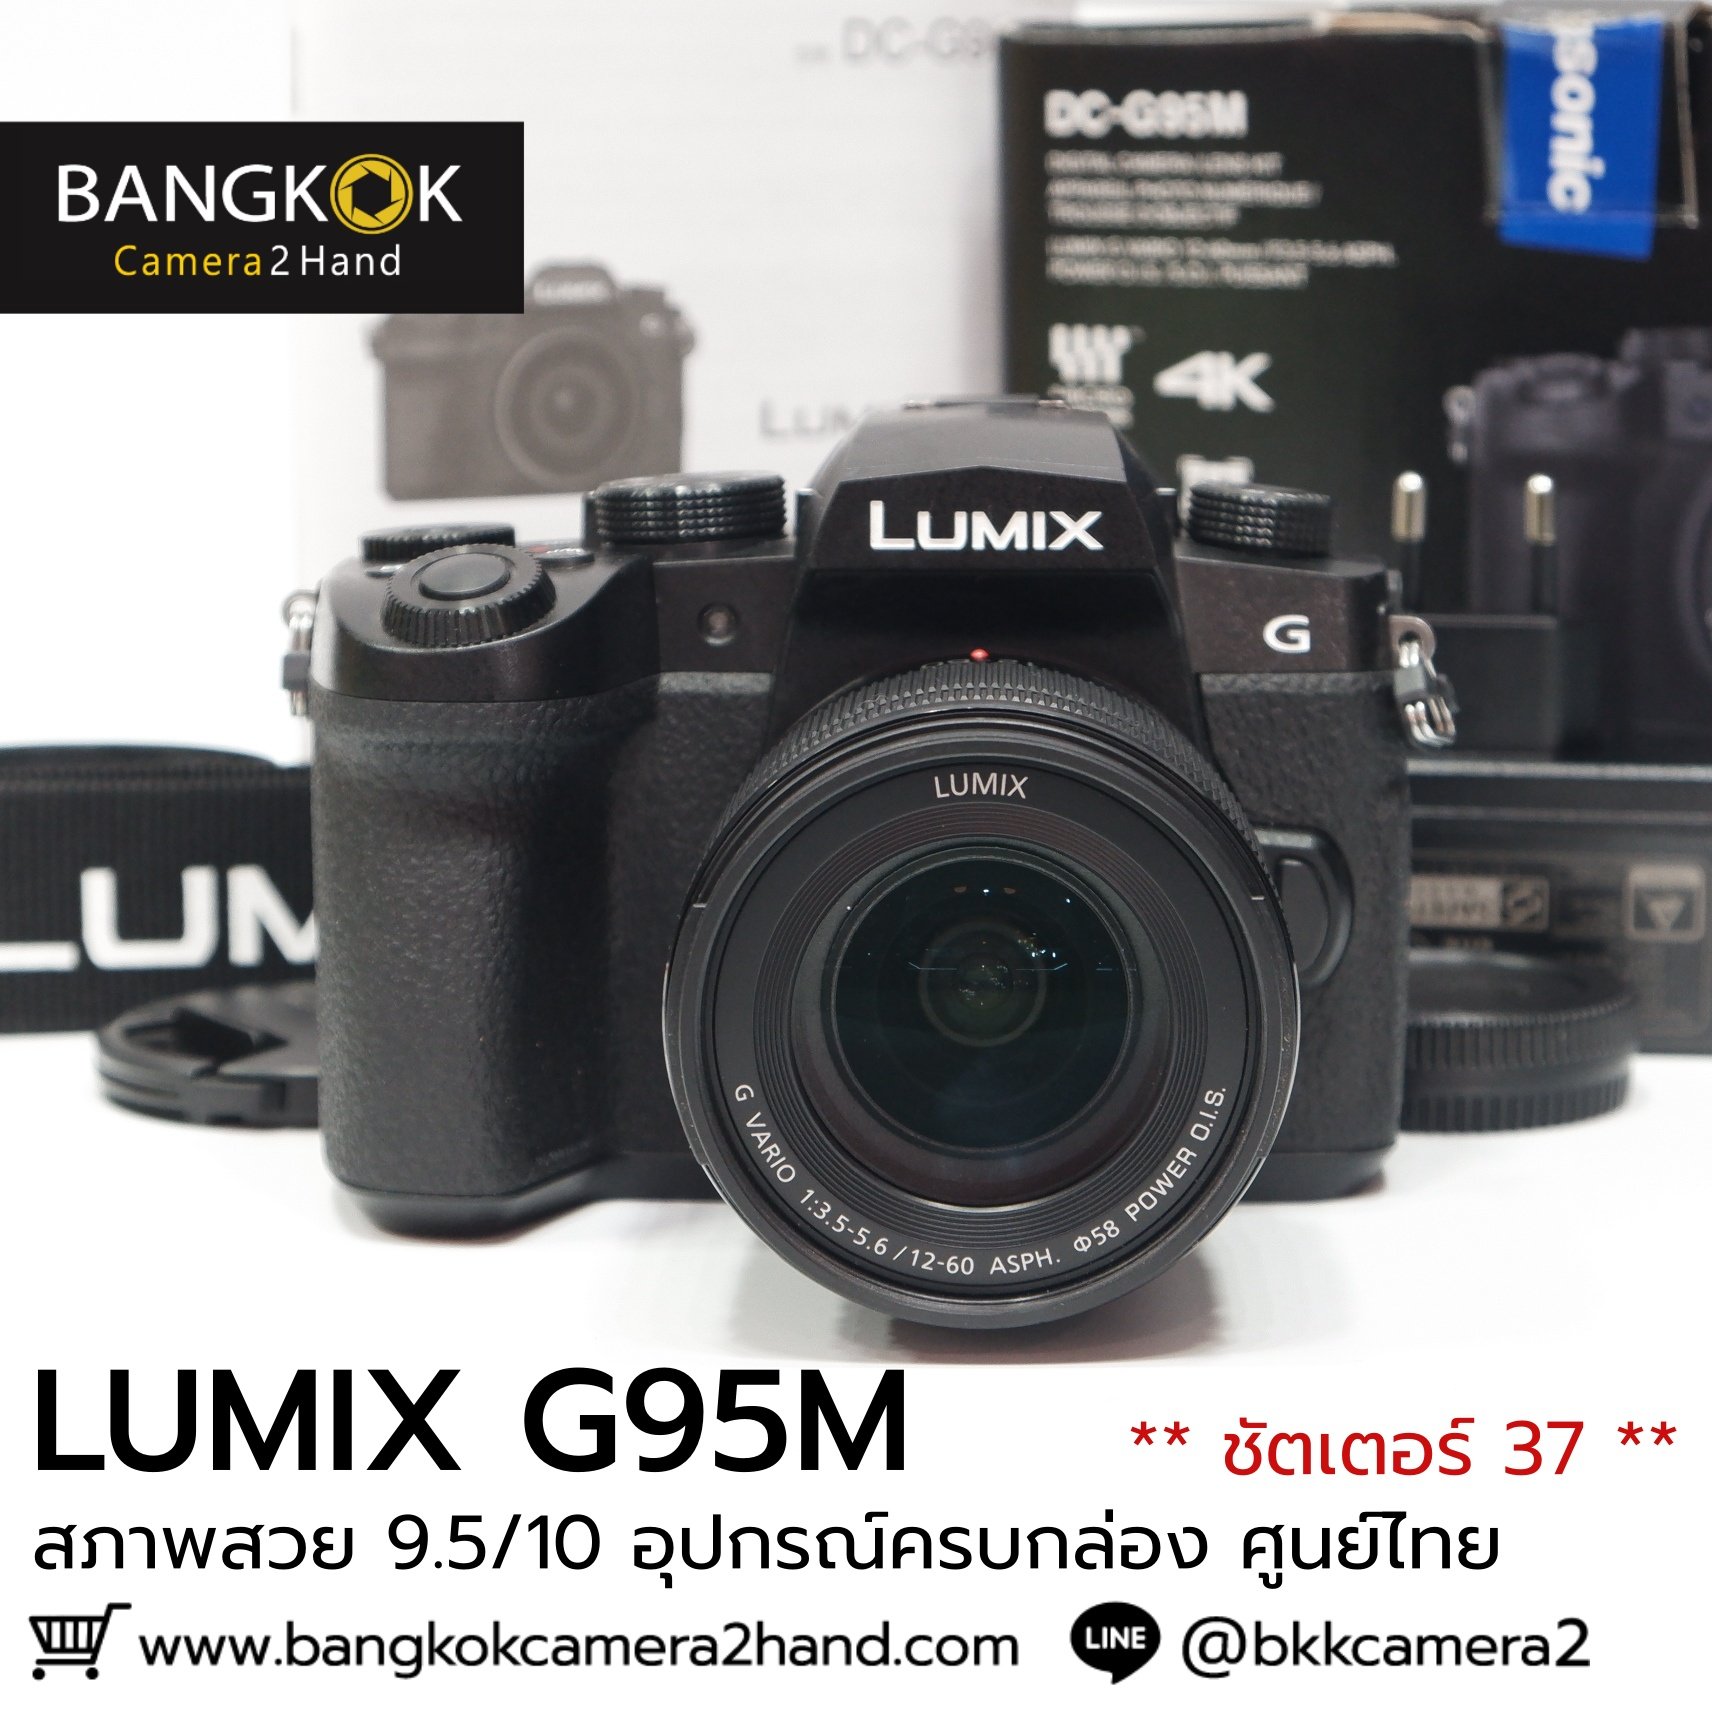 Lumix G95M ชัตเตอร์เพียง 37